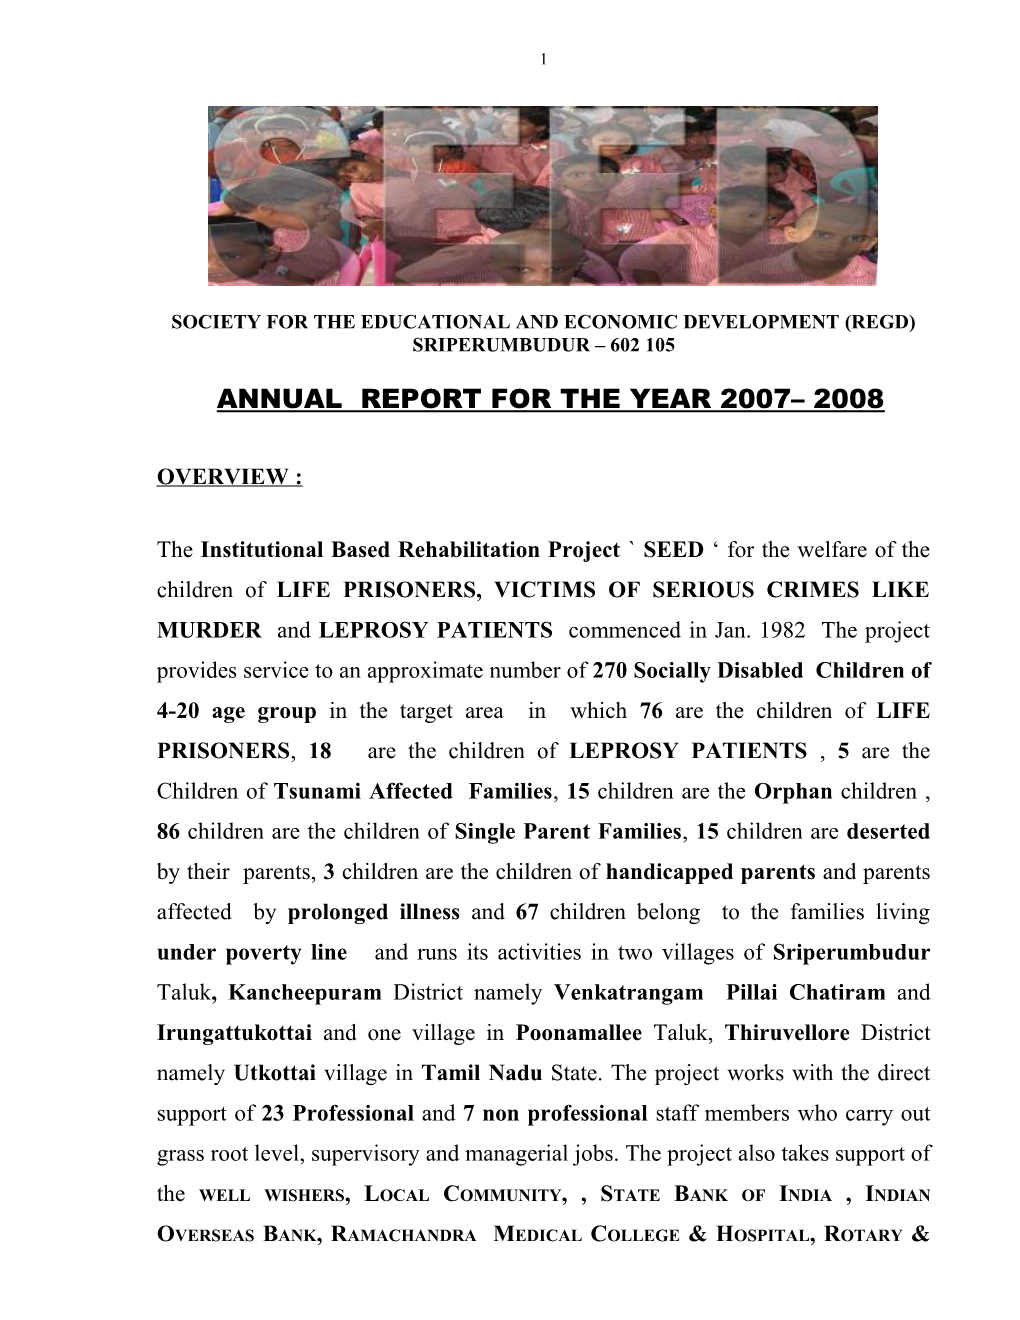 Society for the Educational and Economic Development (Regd) Sriperumbudur 602 105